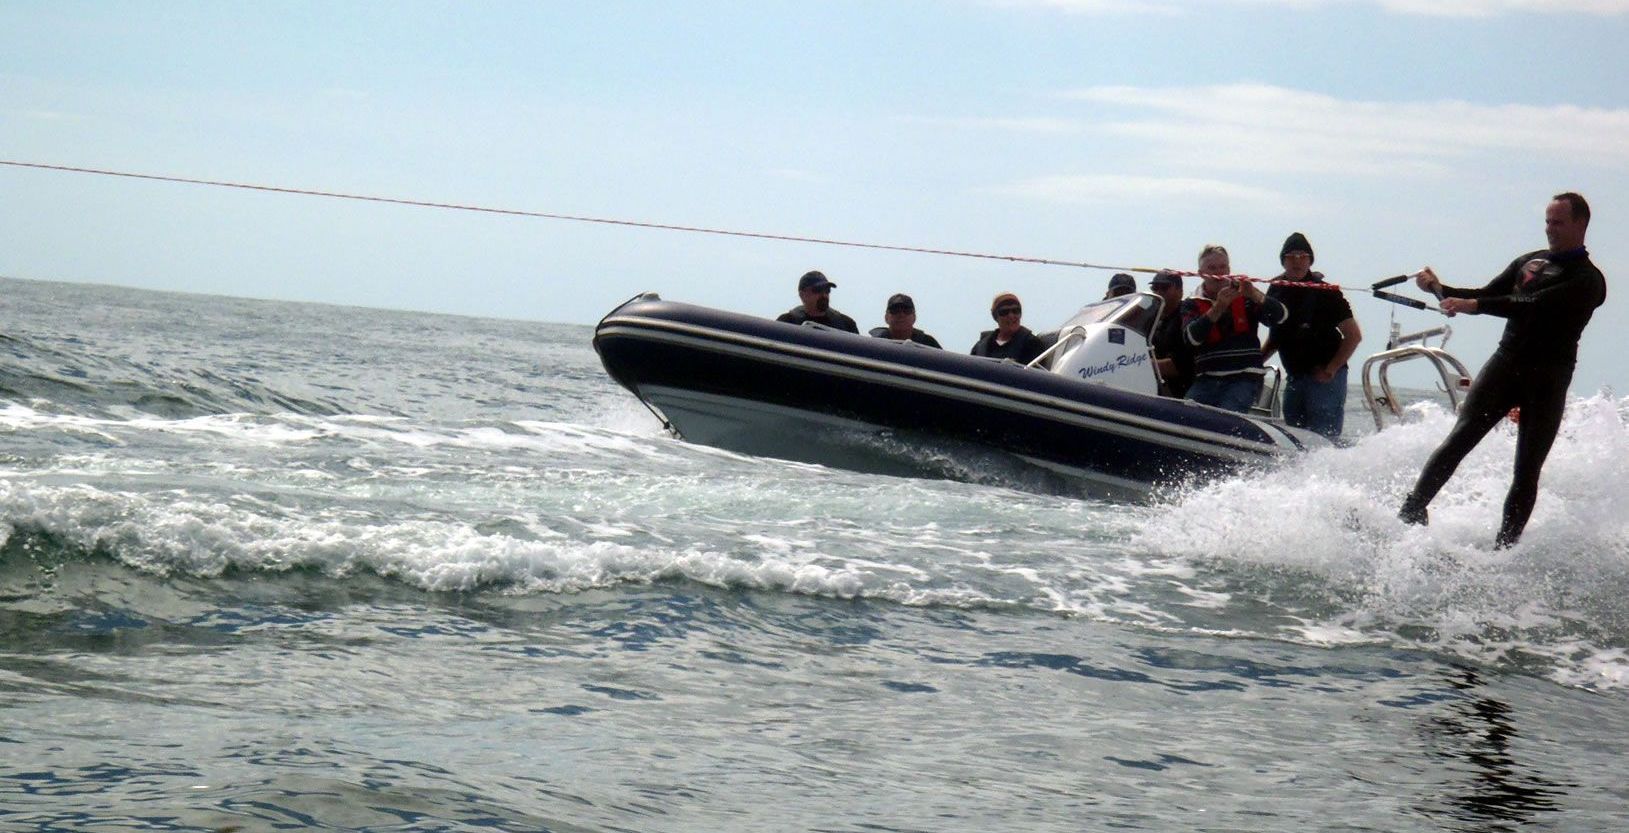 Fastest crossing of the Irish Sea on wakeboards: Irish cops set world record (Video)